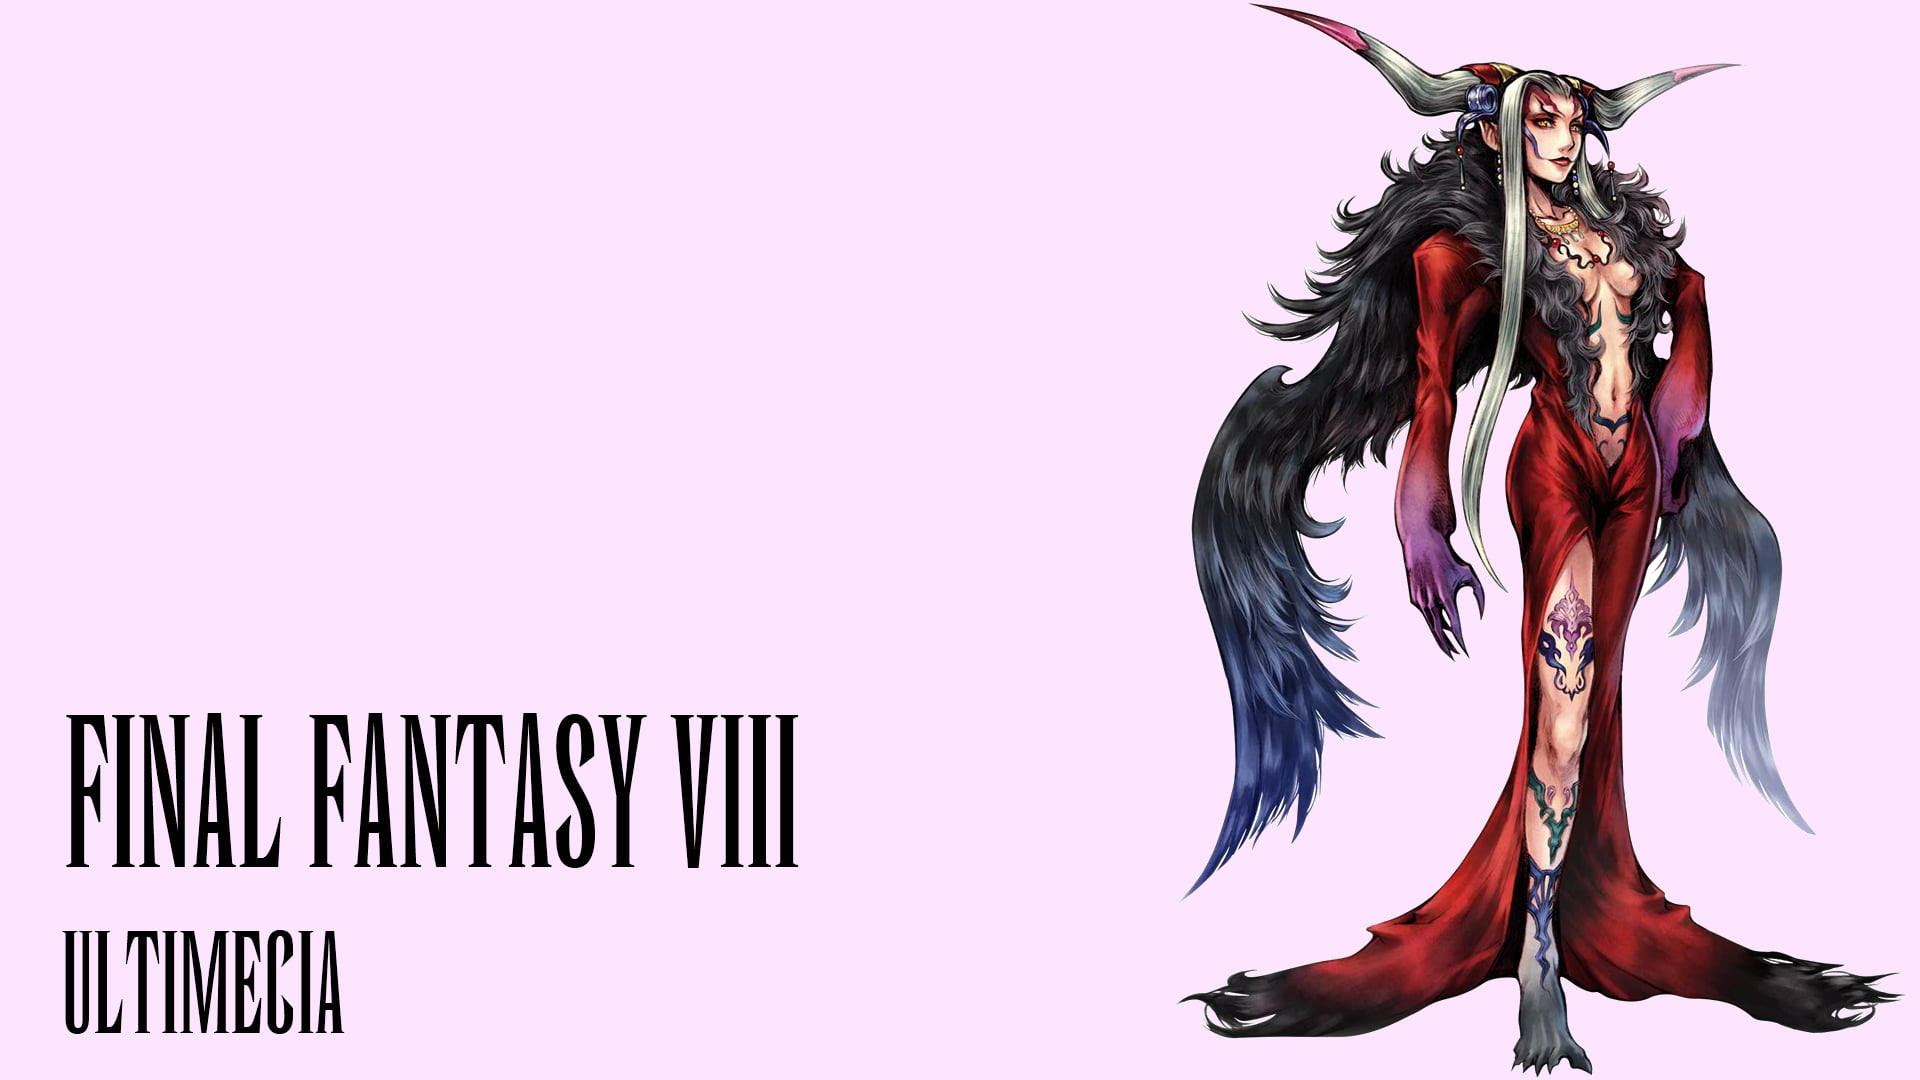 Final Fantasy VIII Ultimecia poster, video games, Final Fantasy VIII, Ultimecia